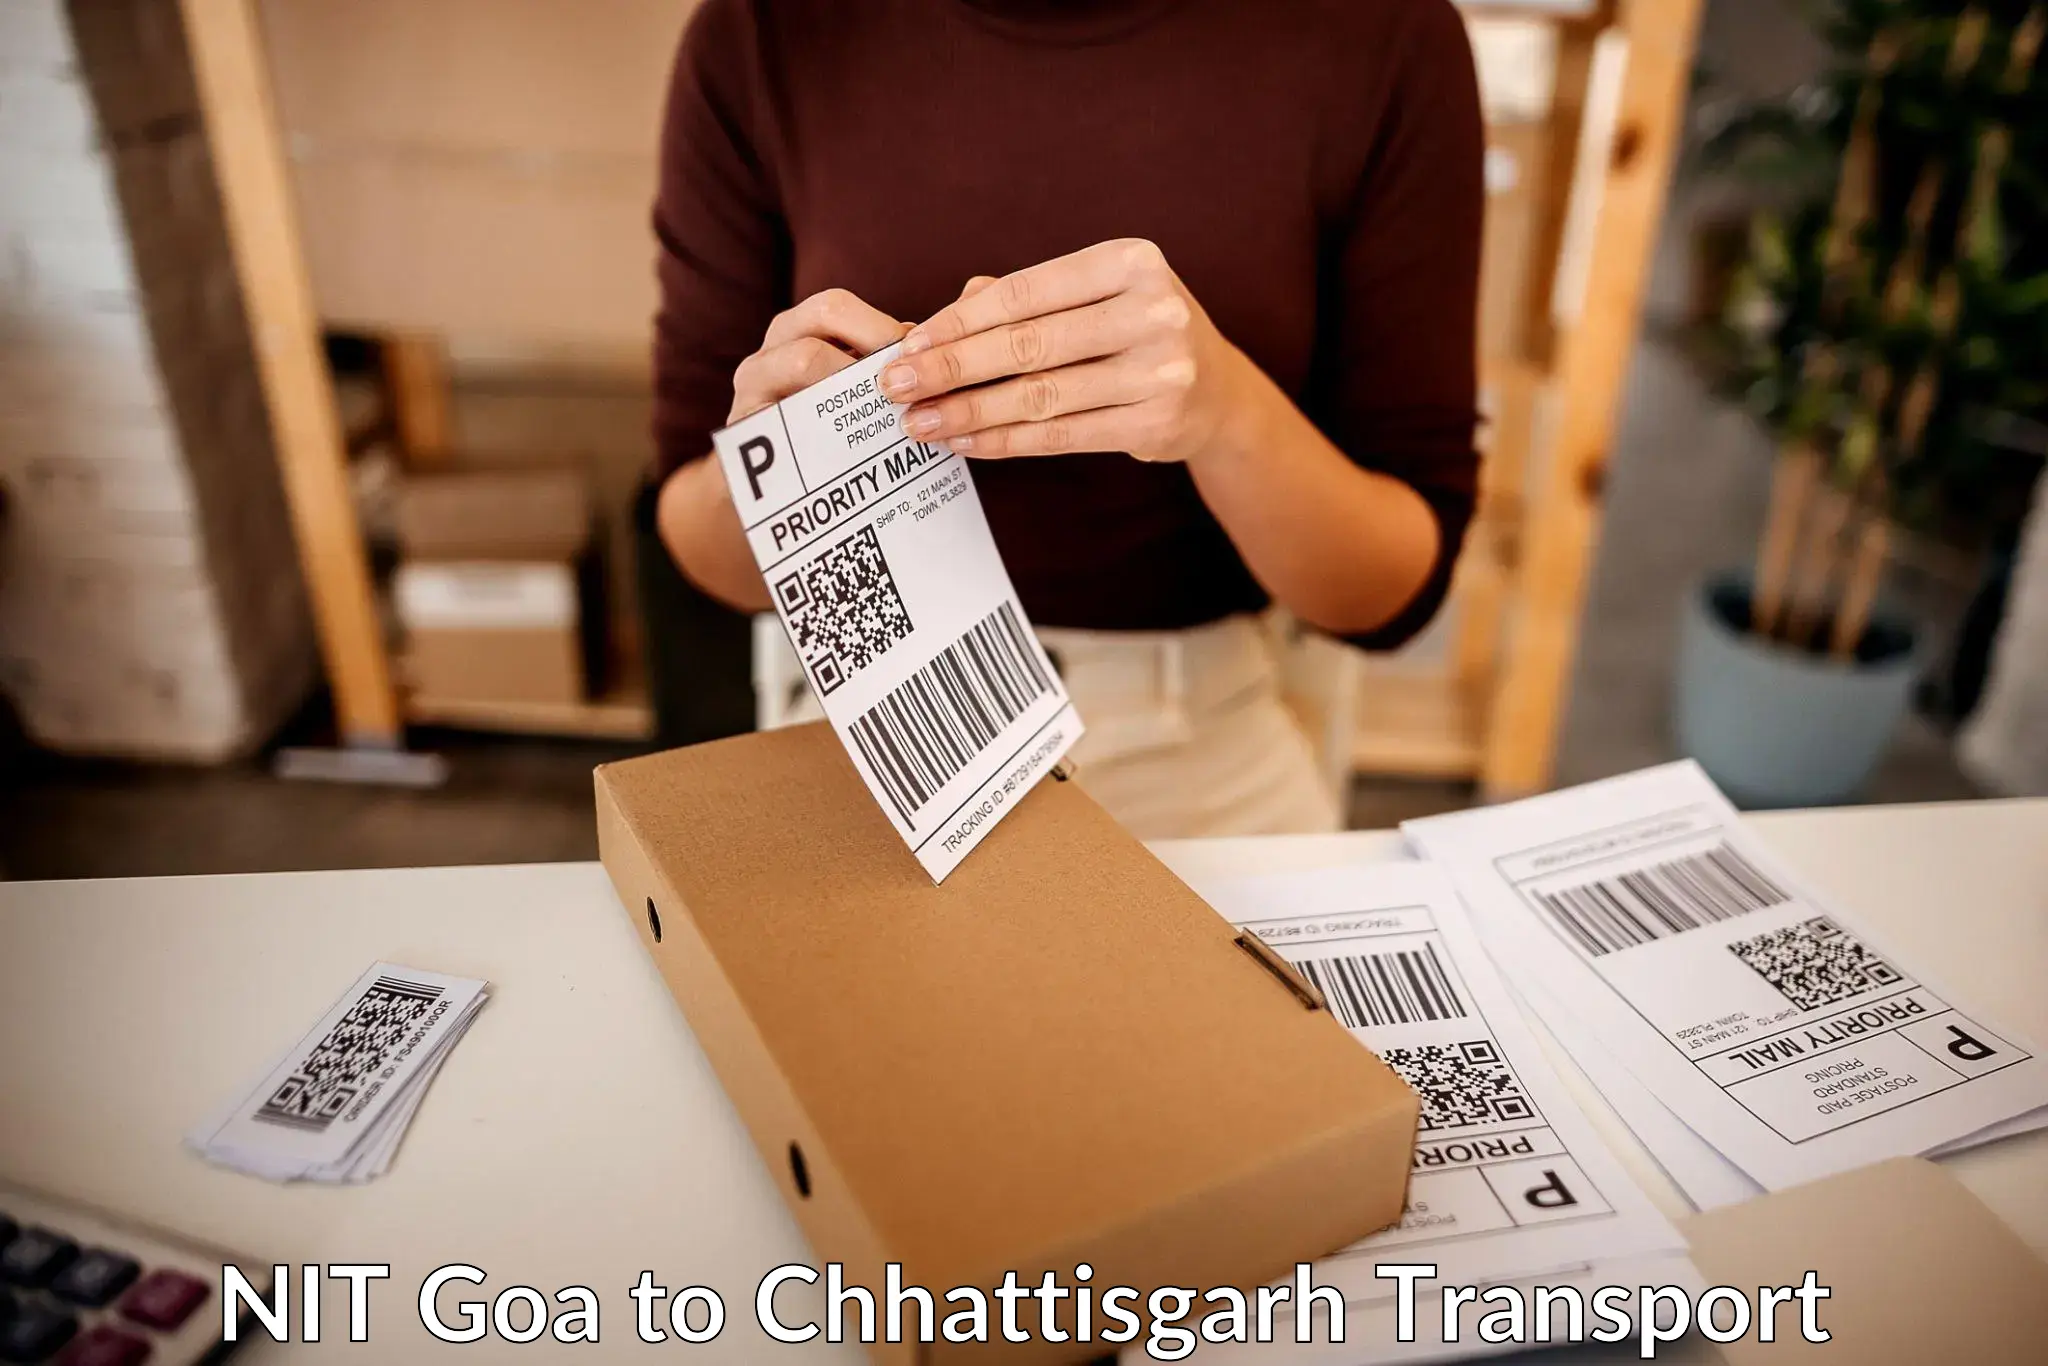 Pick up transport service NIT Goa to Korea Chhattisgarh